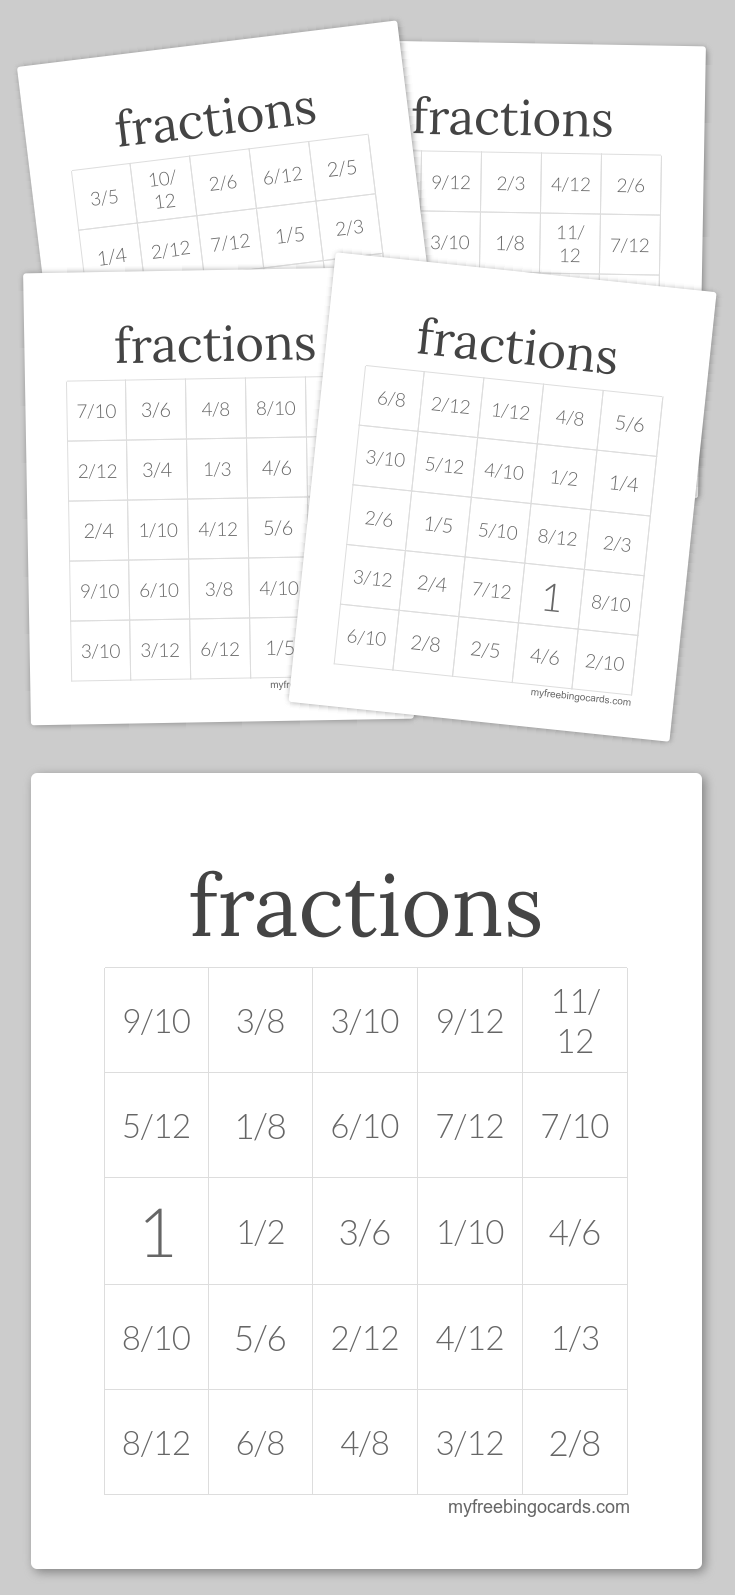 Fractions Bingo Free Bingo Cards Bingo Cards Bingo 